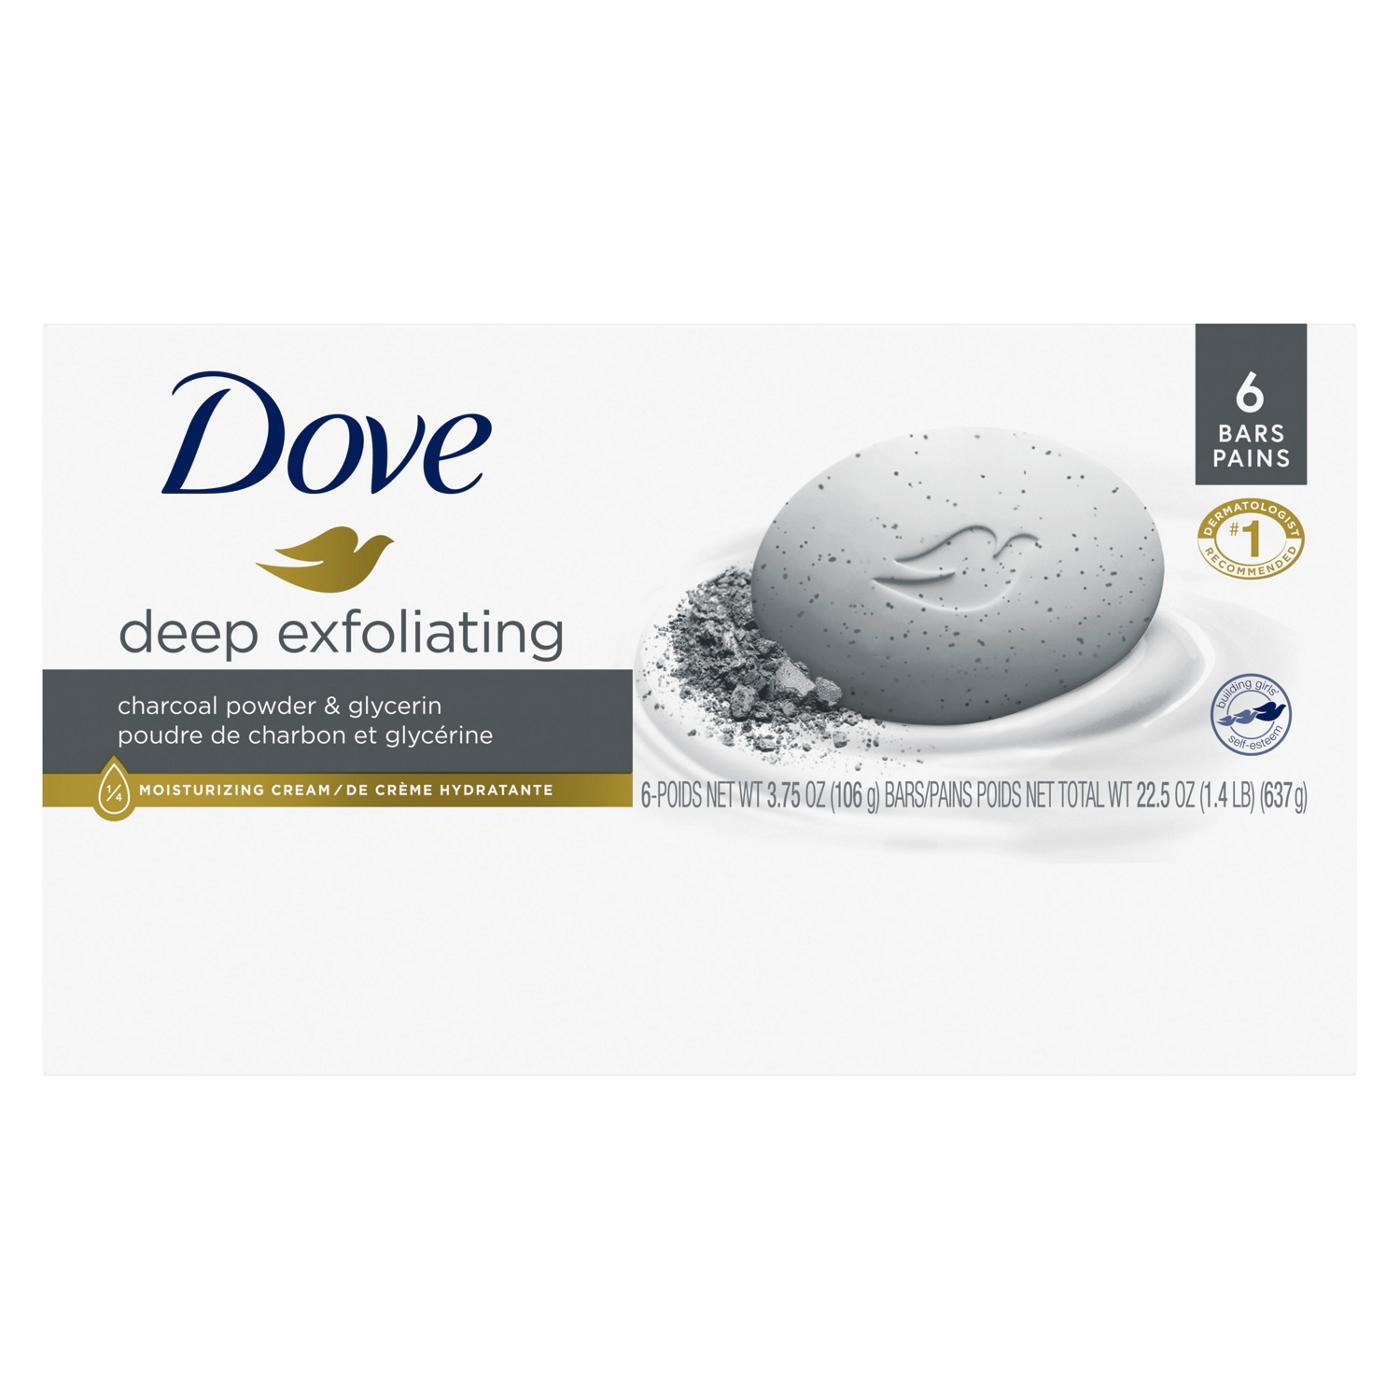 Dove Deep Exfoliating Bar Soap - Charcoal powder & glycerin; image 4 of 4